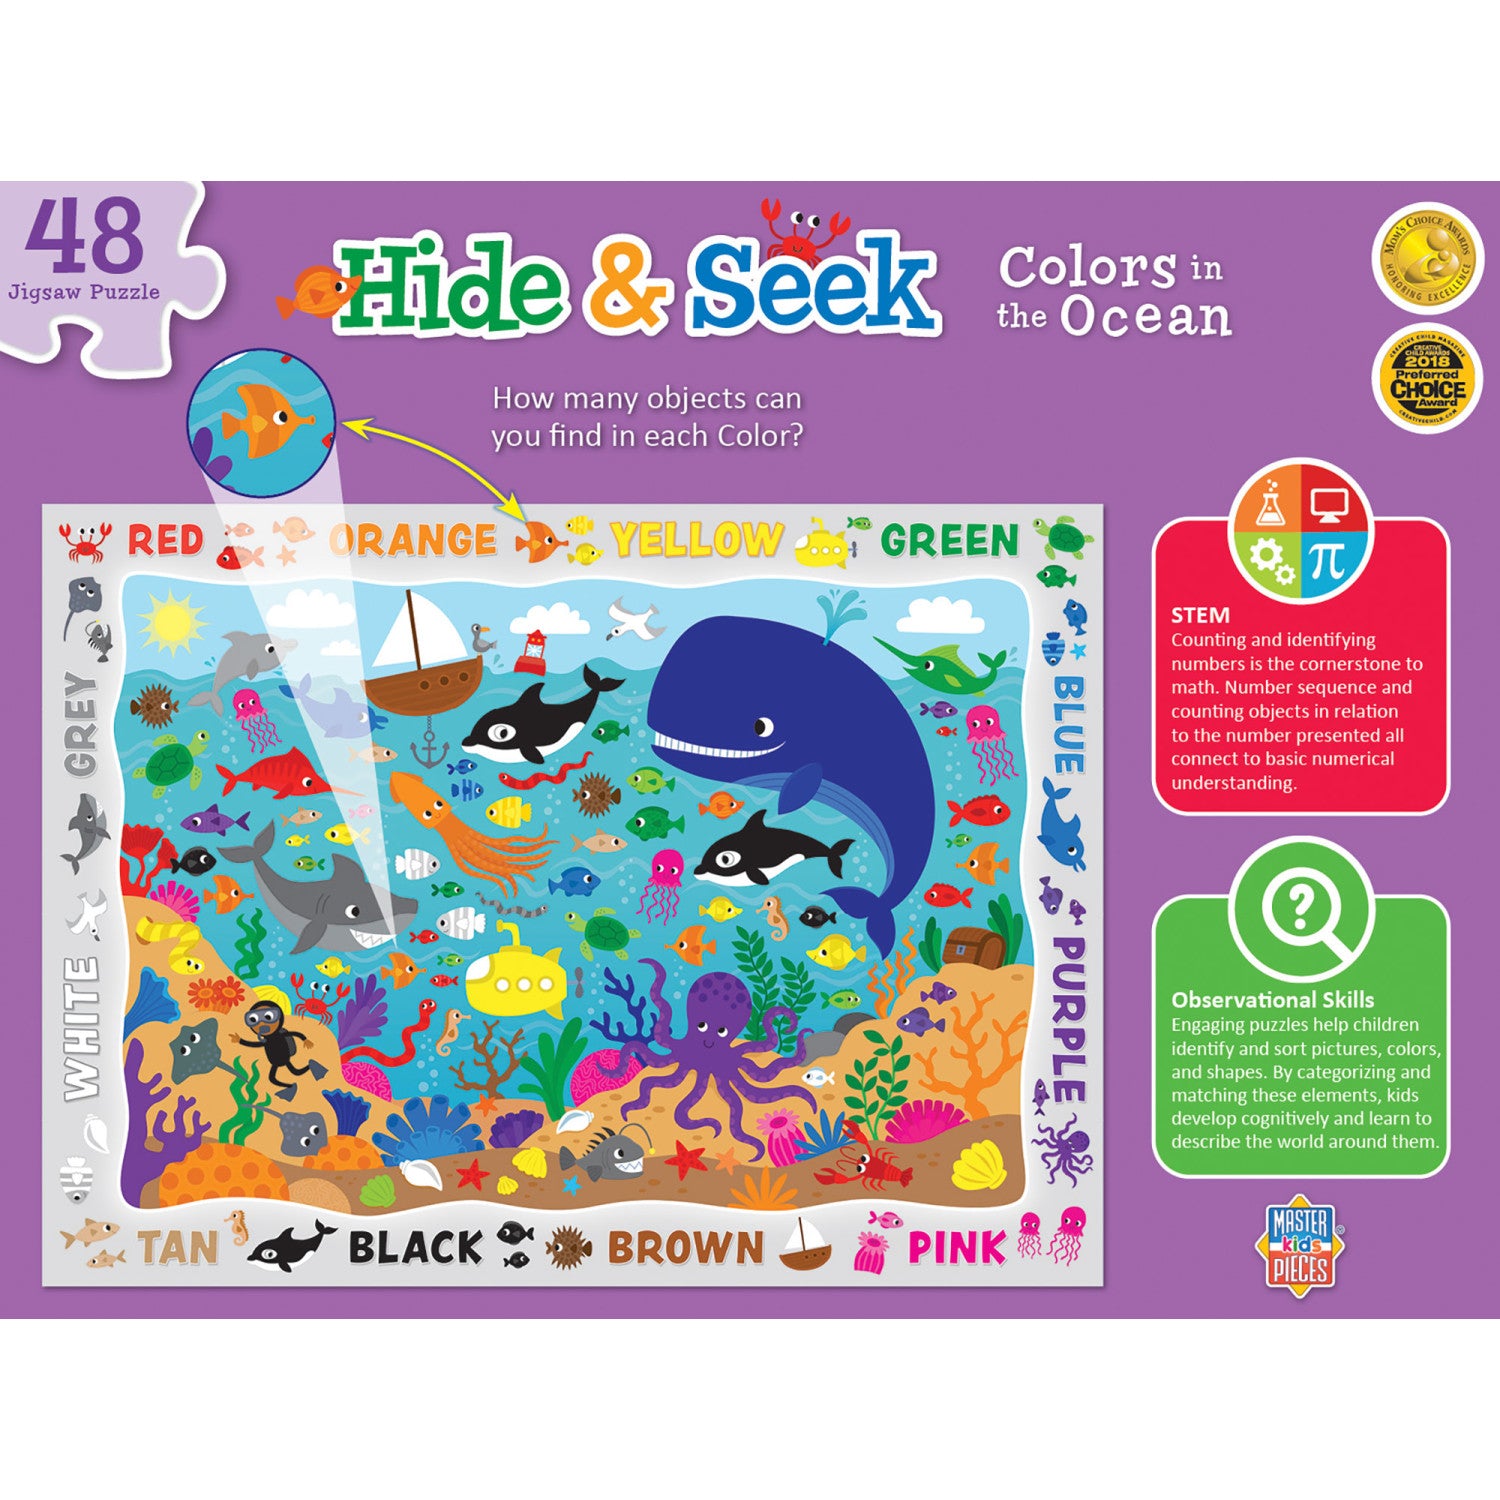 Hide & Seek - Colors in the Ocean 48 Piece Jigsaw Puzzle